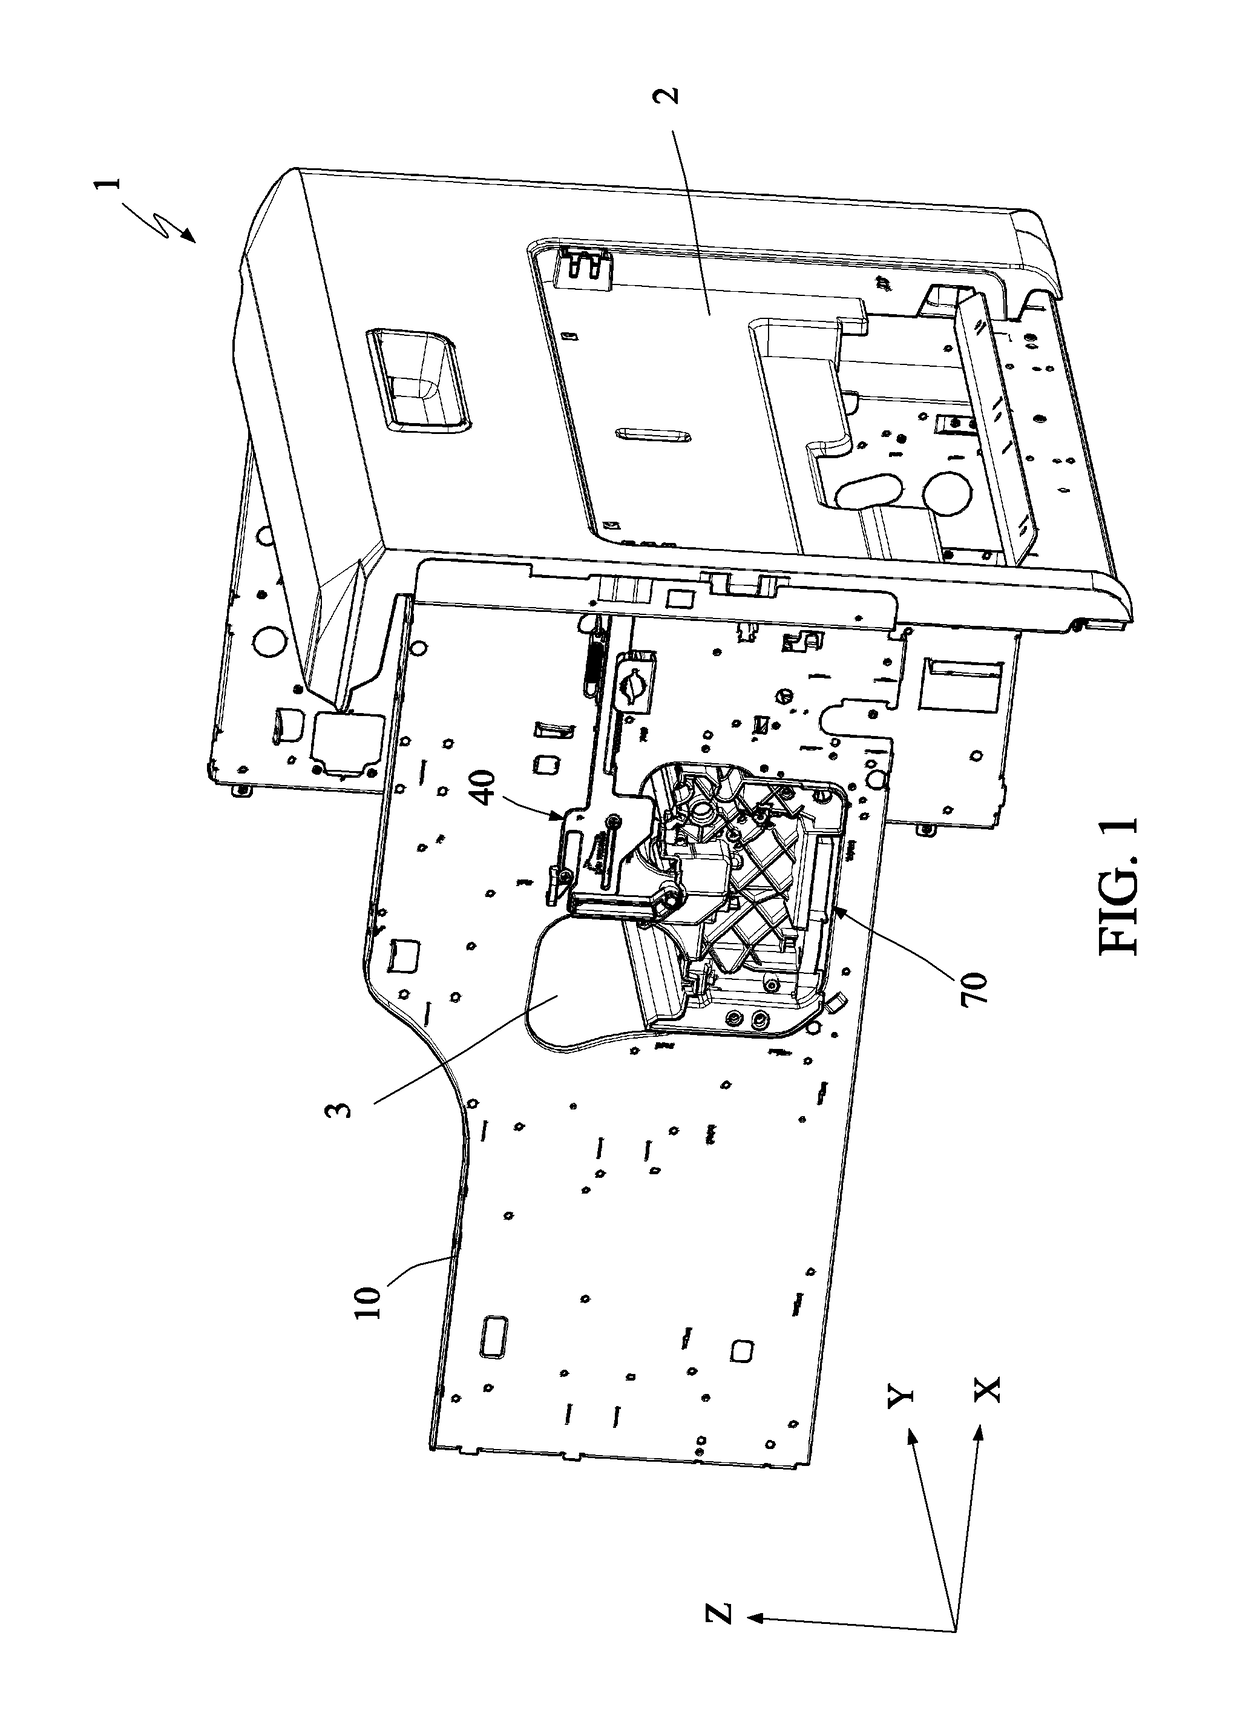 Printer module having print-head moving mechanism